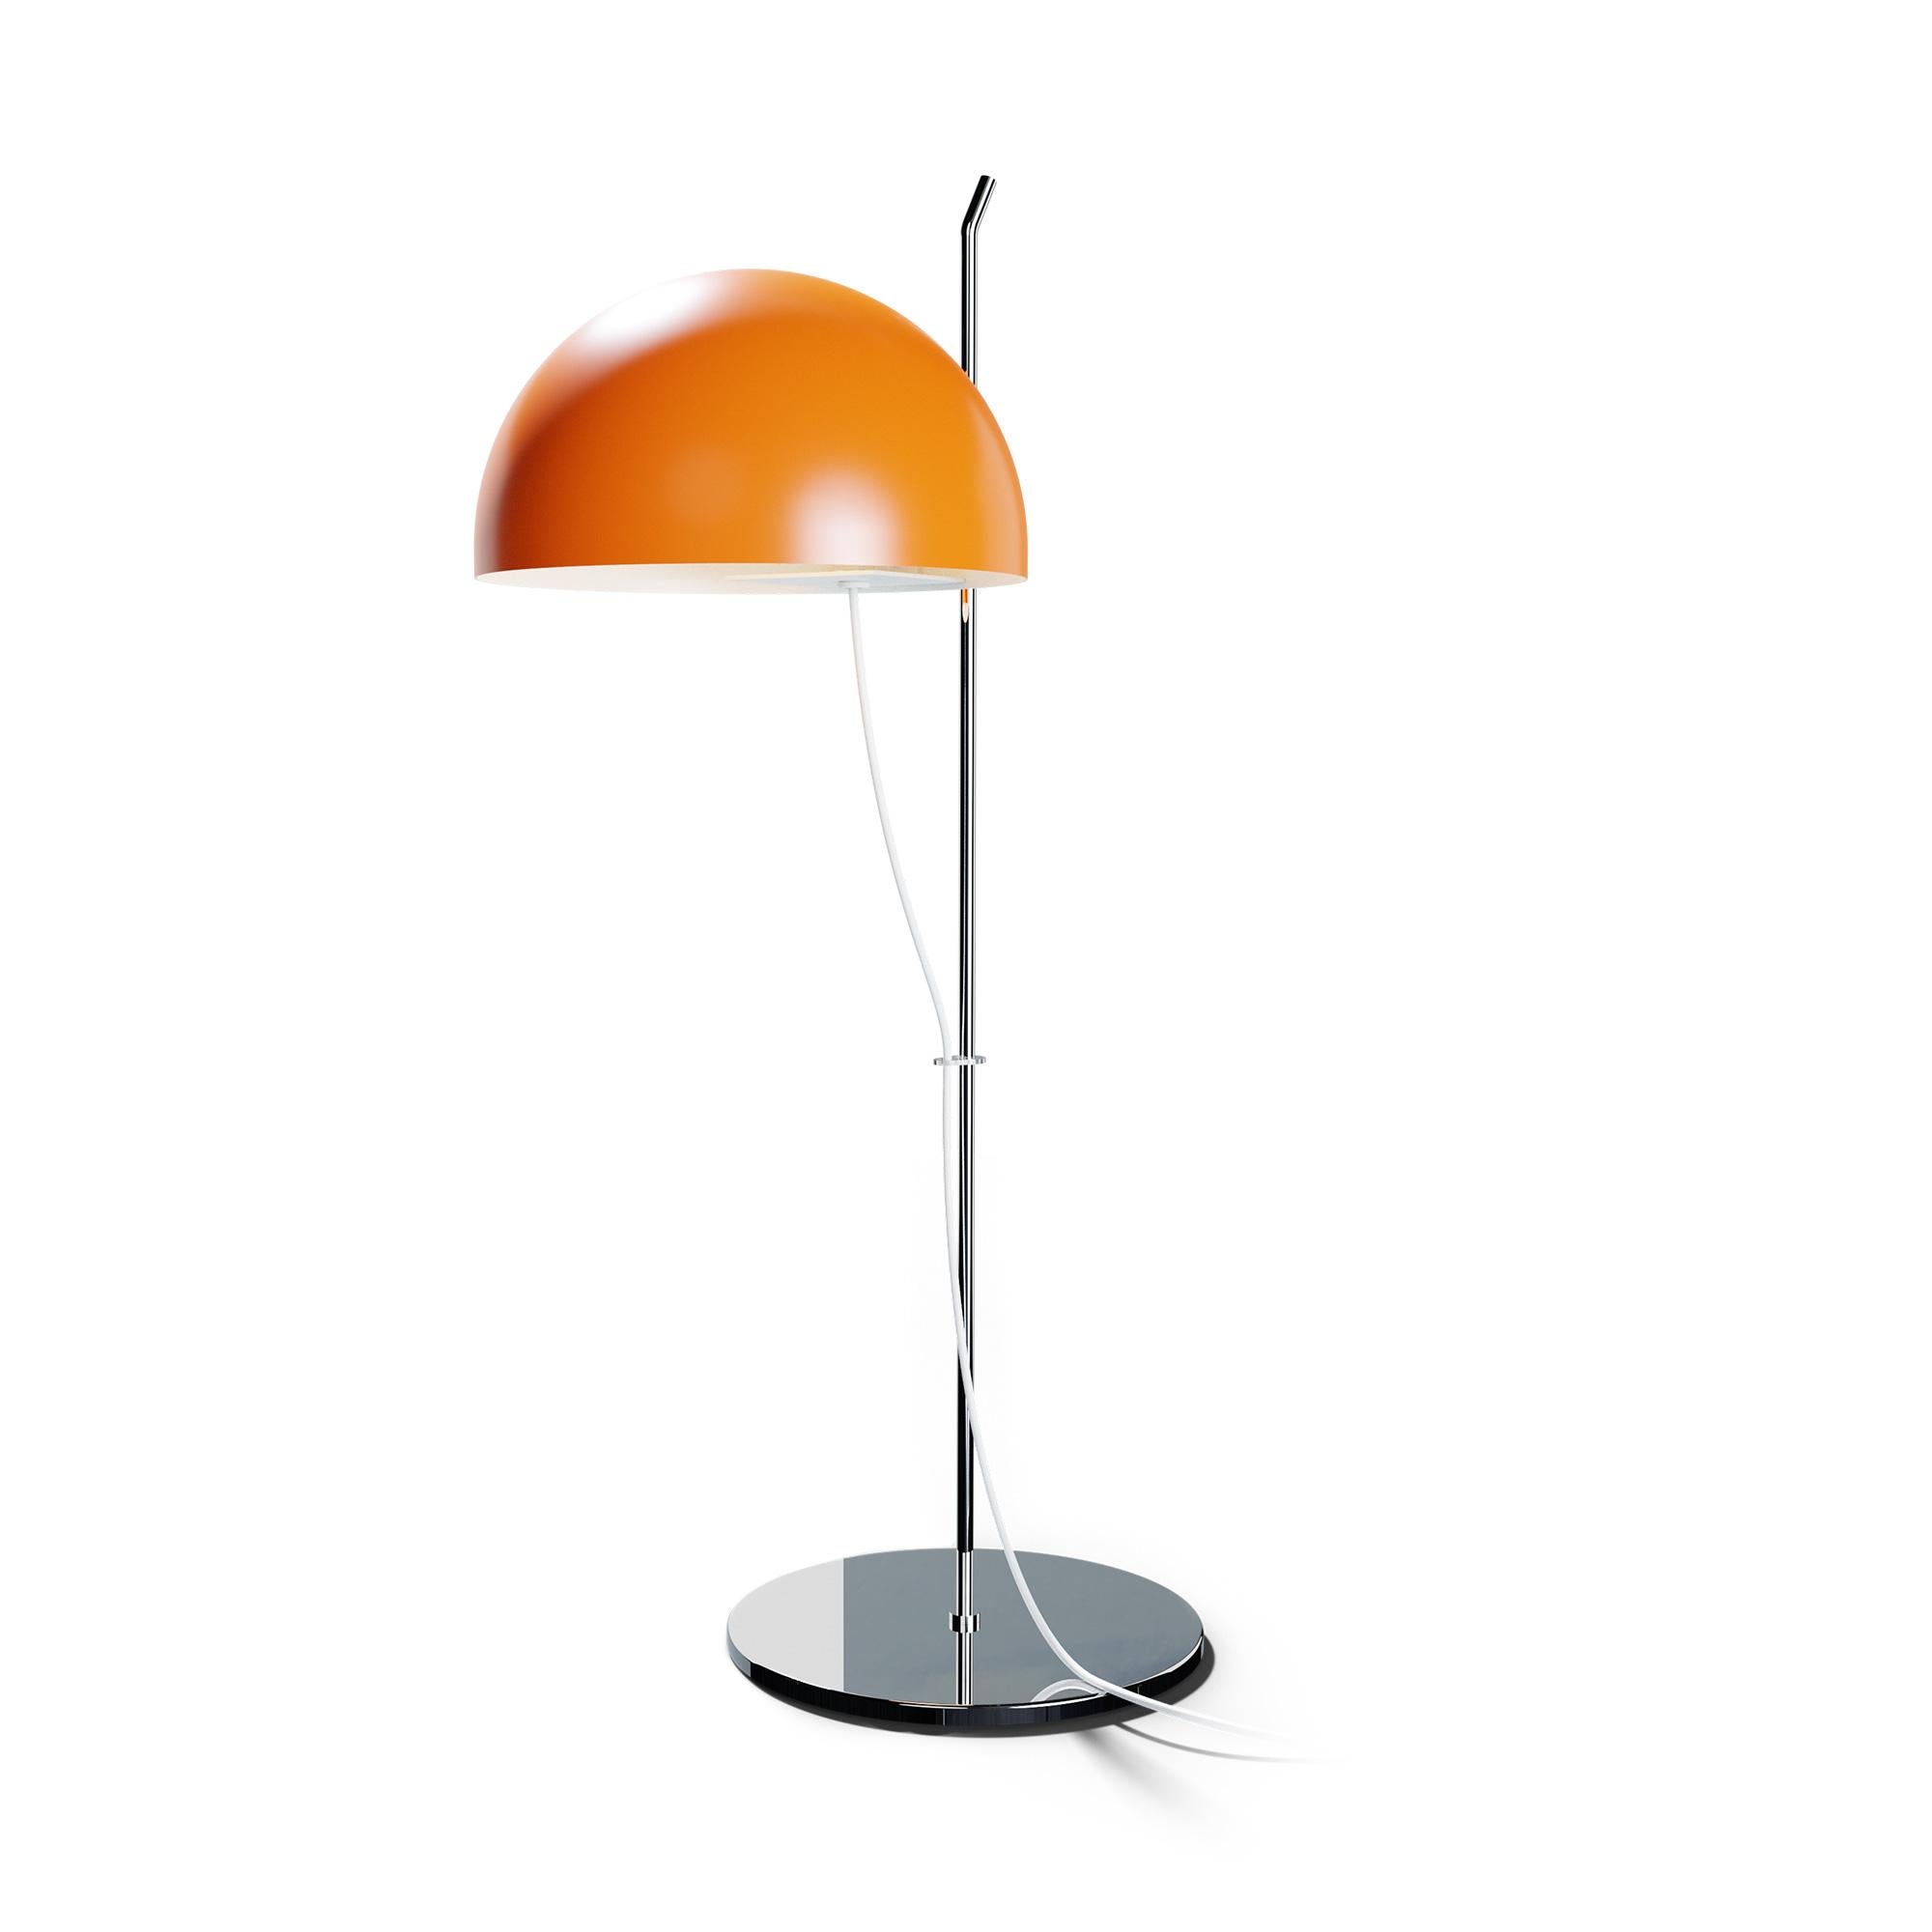 Lacquered Alain Richard 'A21' Desk Lamp in Orange for Disderot For Sale